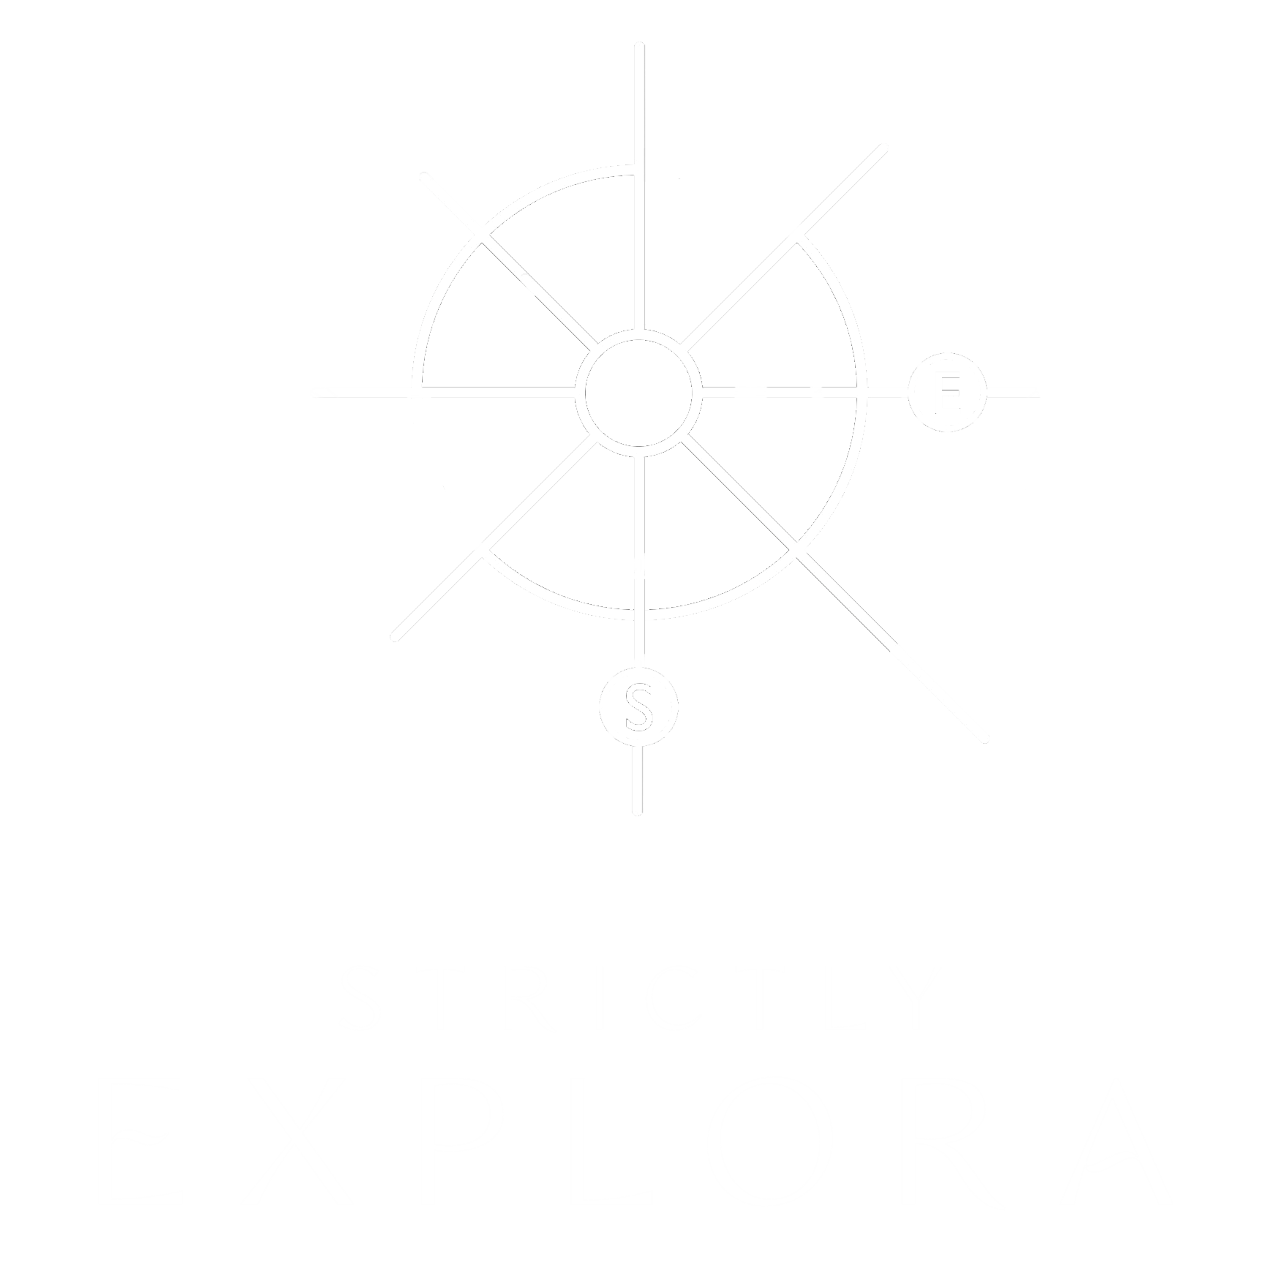 Strictly Explora